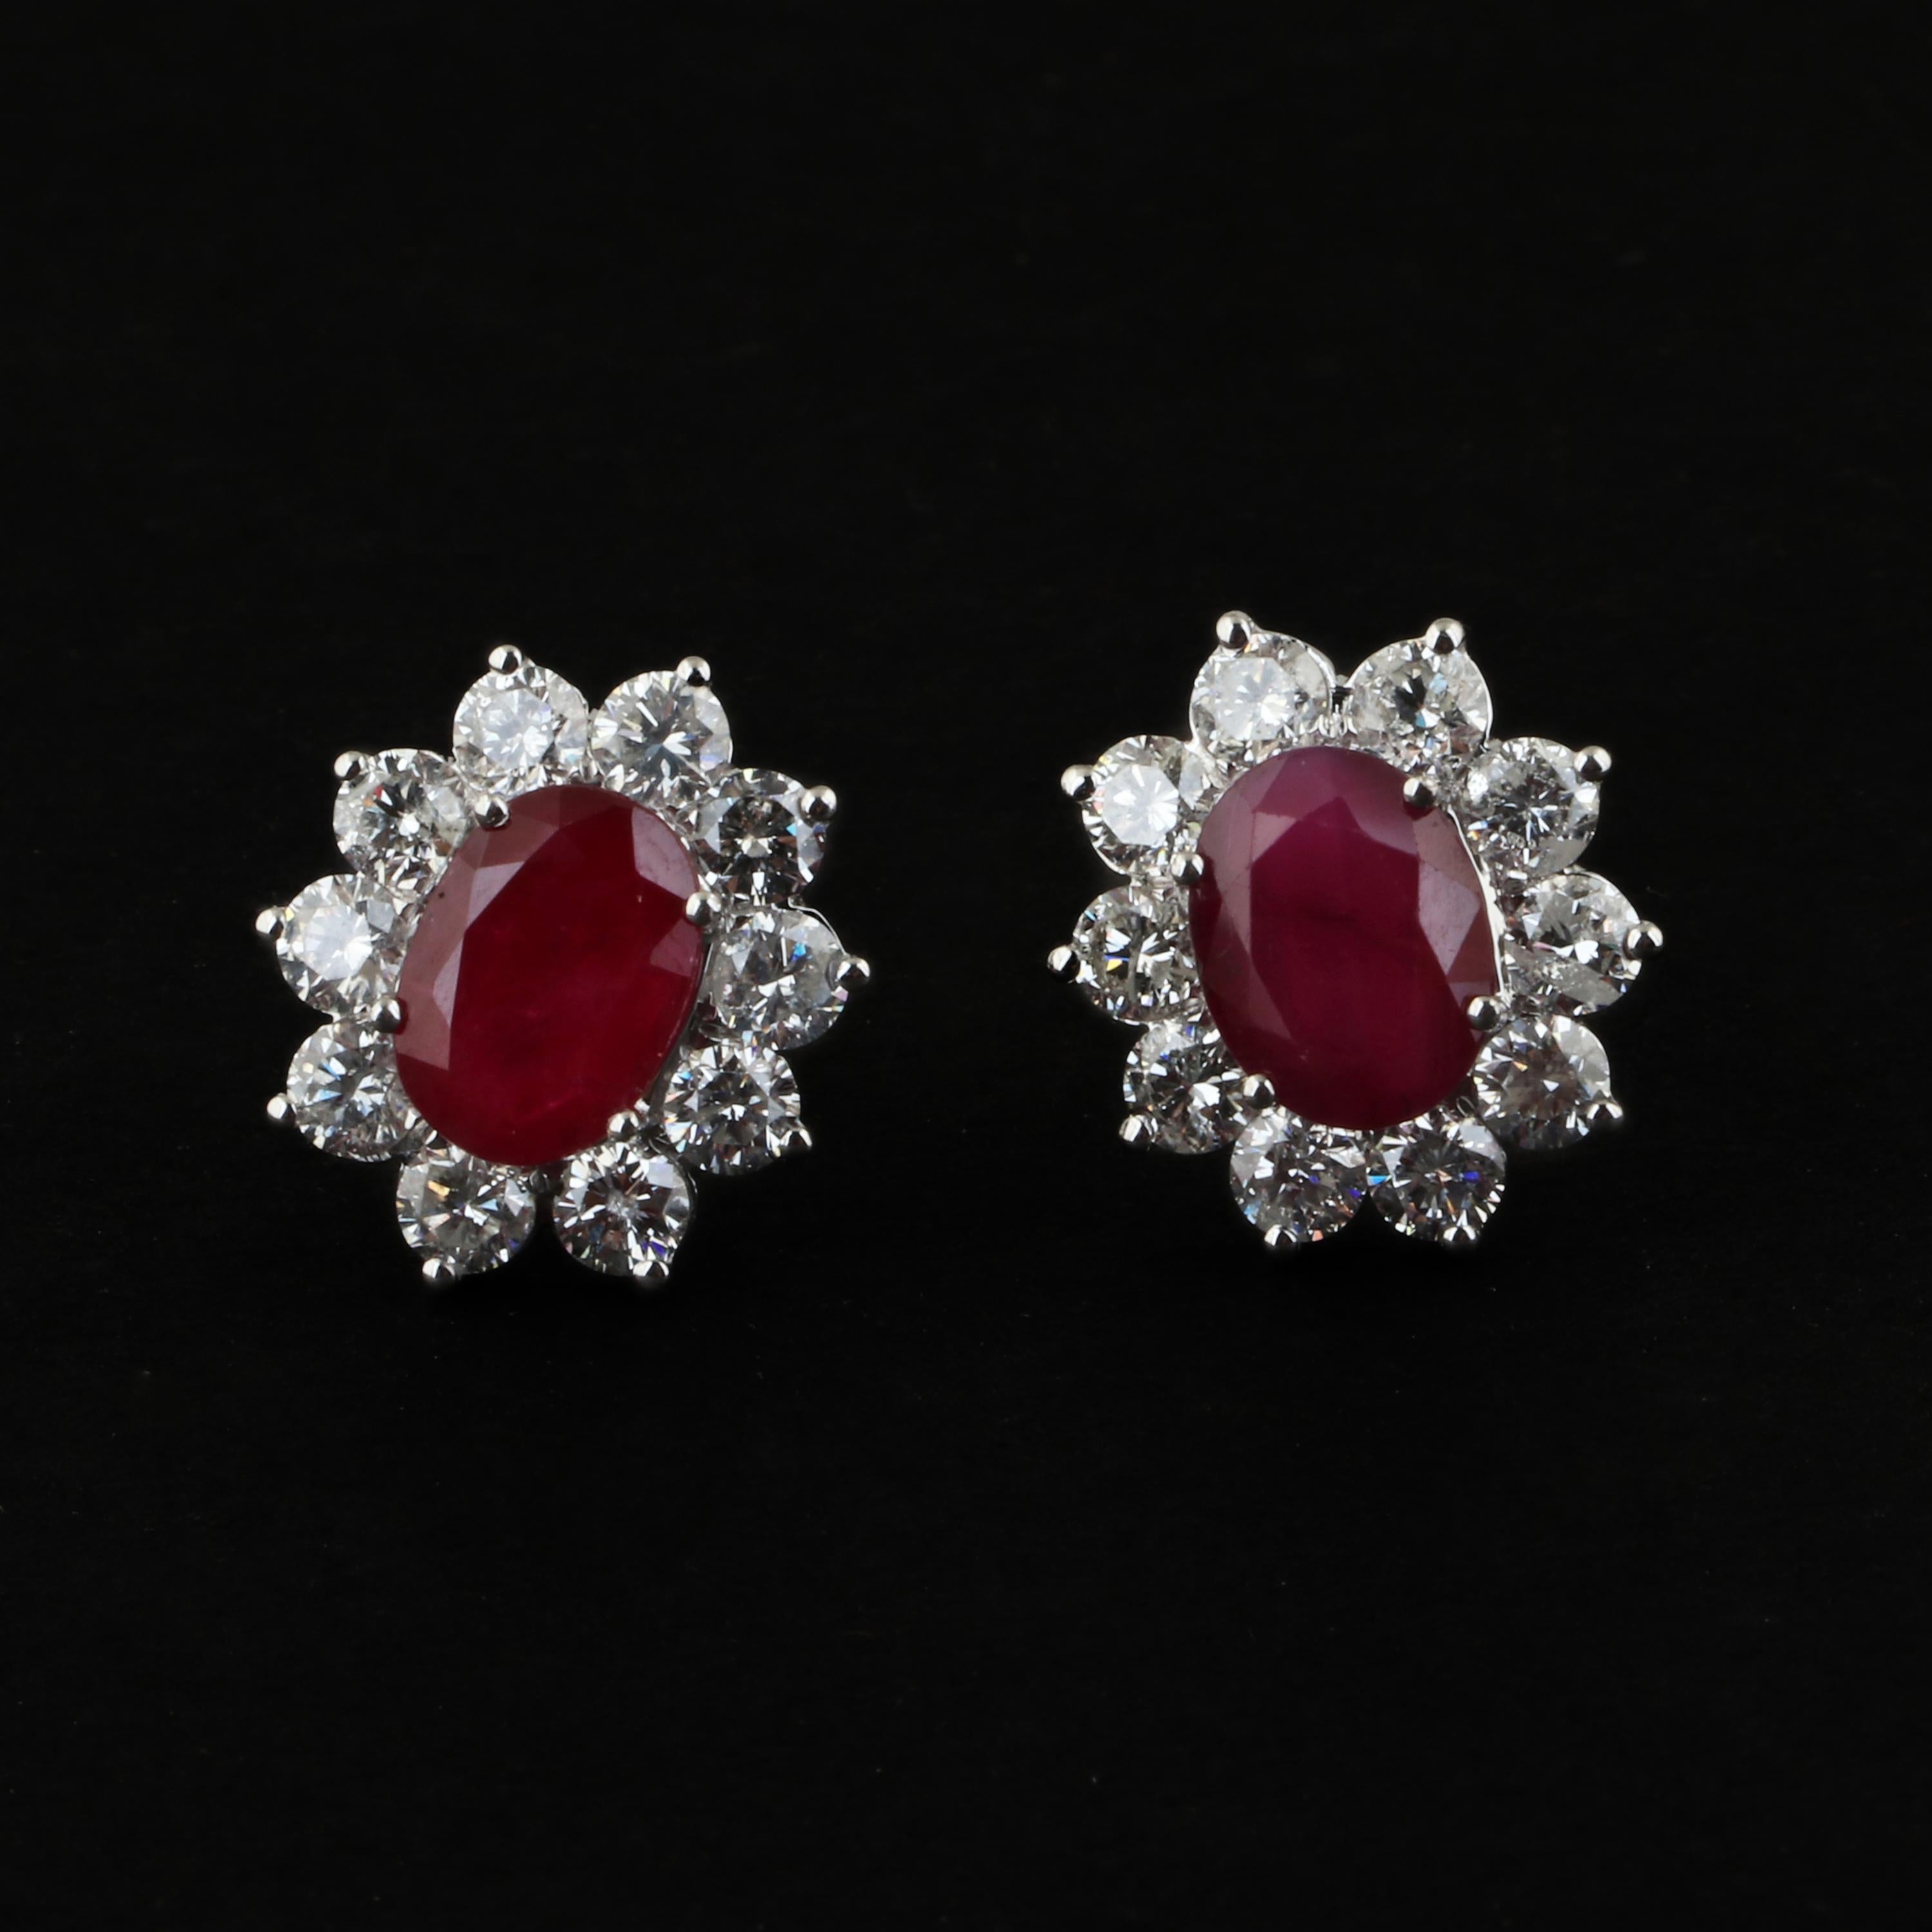 Oval Cut Oval Ruby Gemstone Stud Earrings Diamond 18 Karat White Gold Handmade Jewelry For Sale